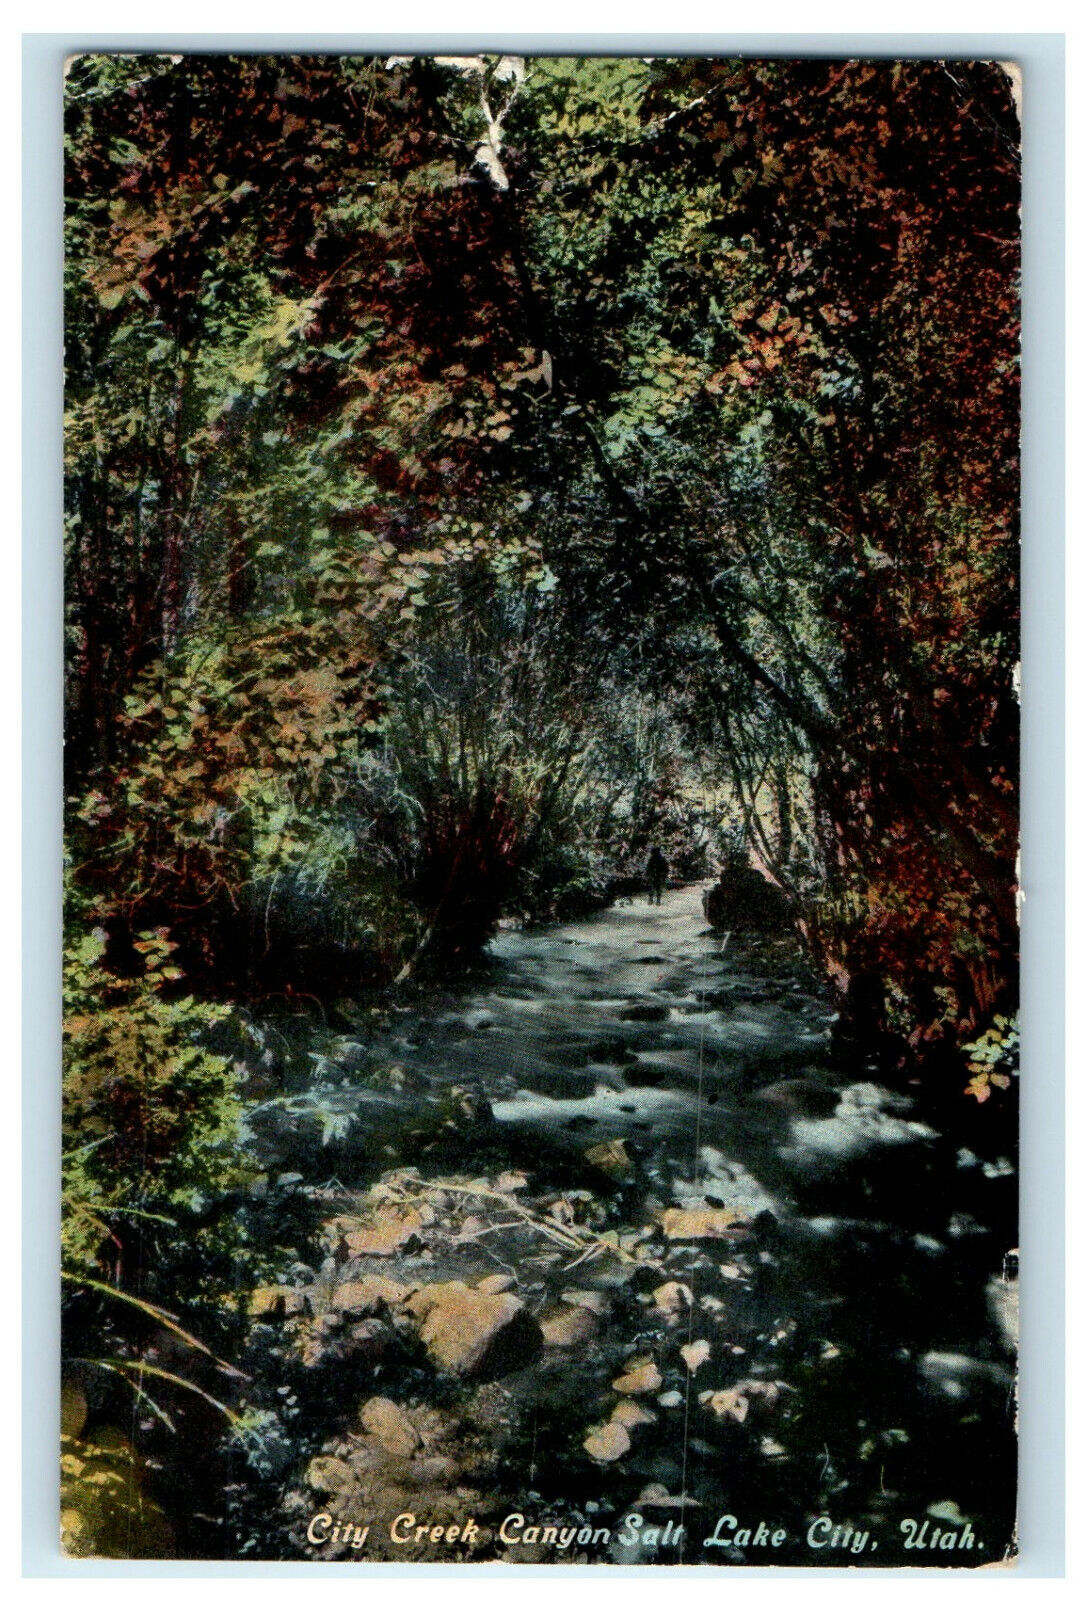 1915 Yellowstone Park NY City Creek Canyon Salt Lake City, Utah UT Postcard